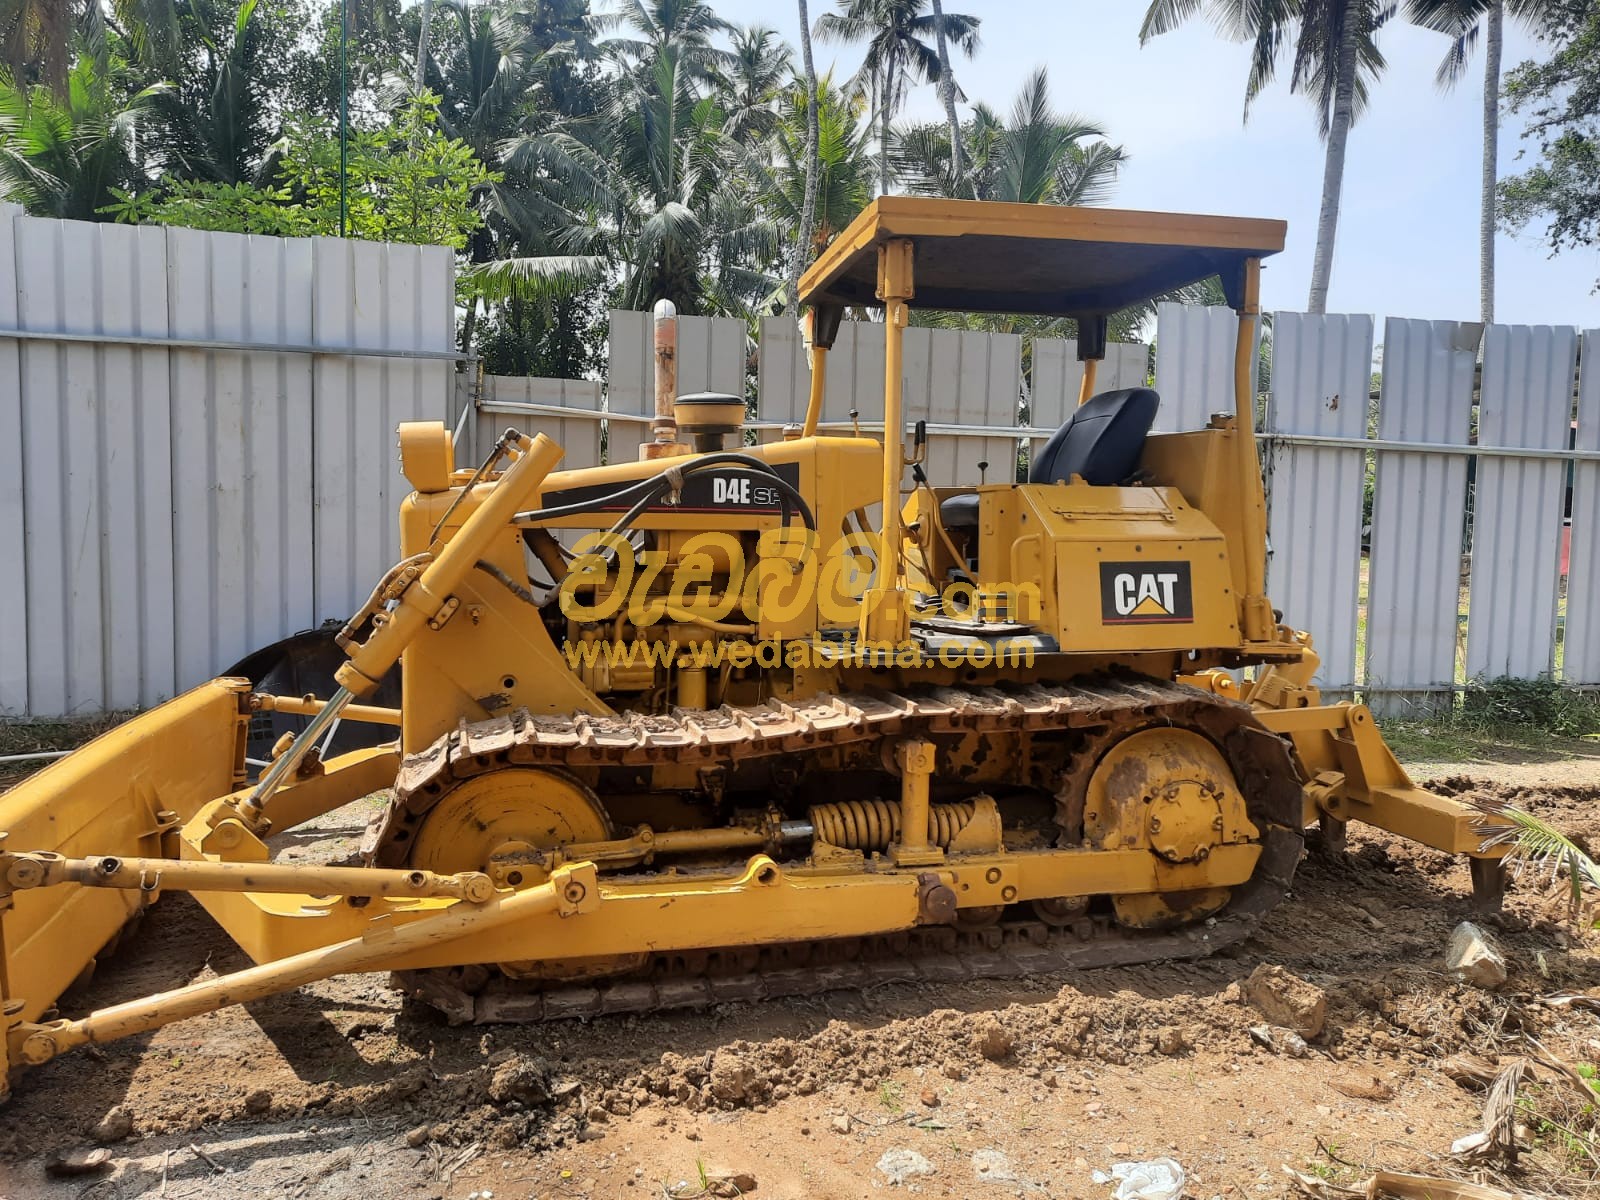 Bulldozer for Rent in Colombo - CAT D4E